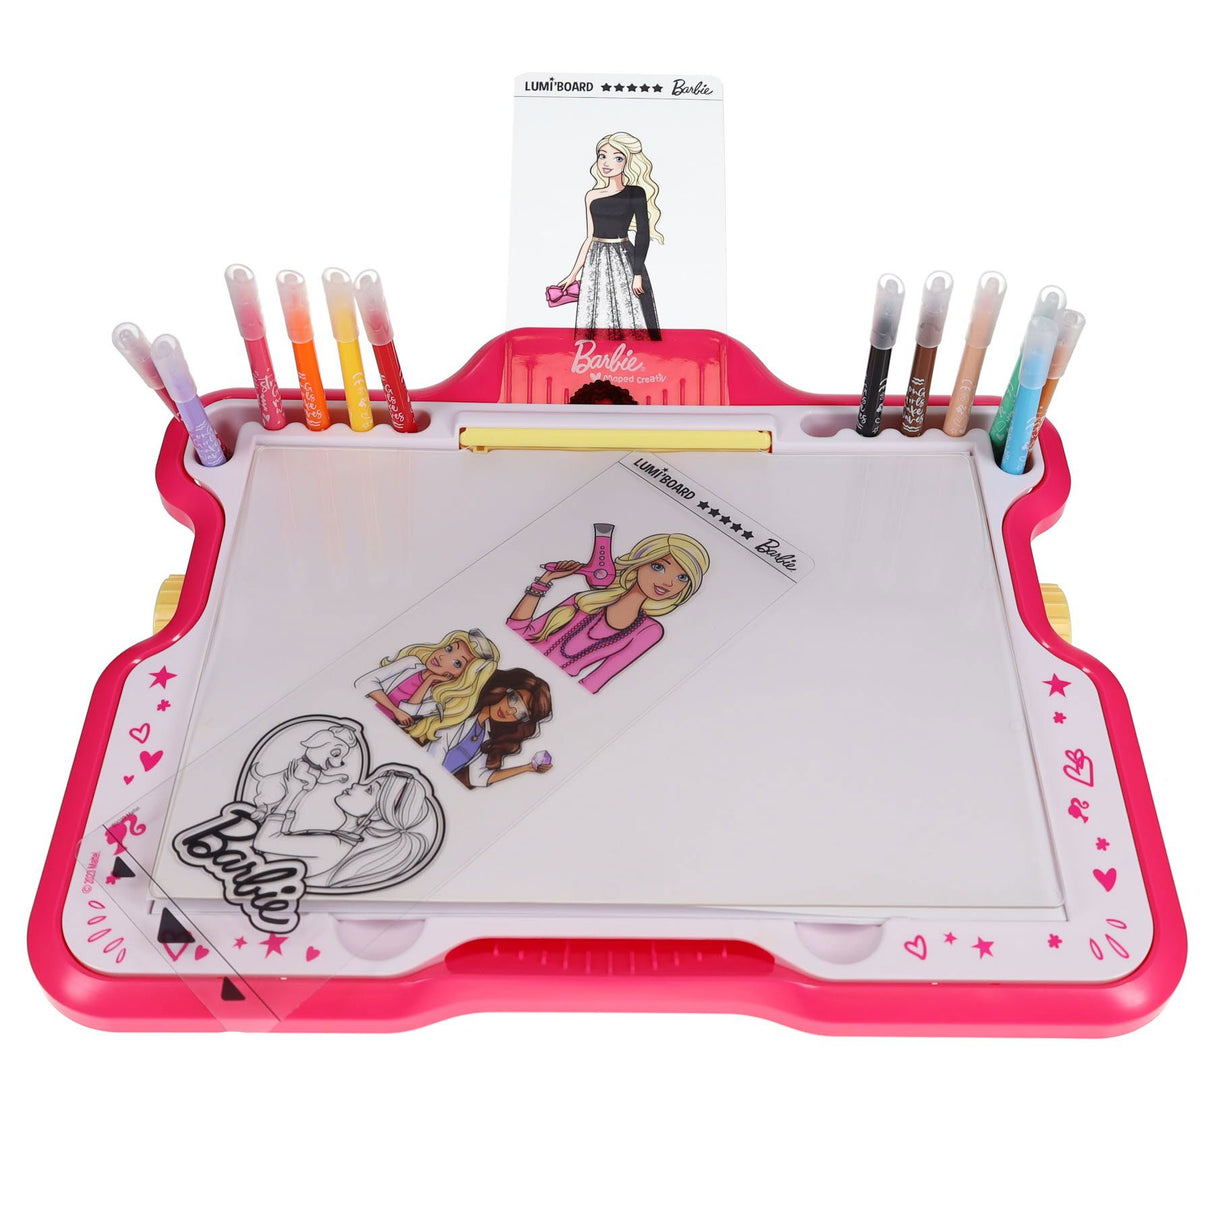 Maped Lumi Board - Barbie | Stationery Shop UK